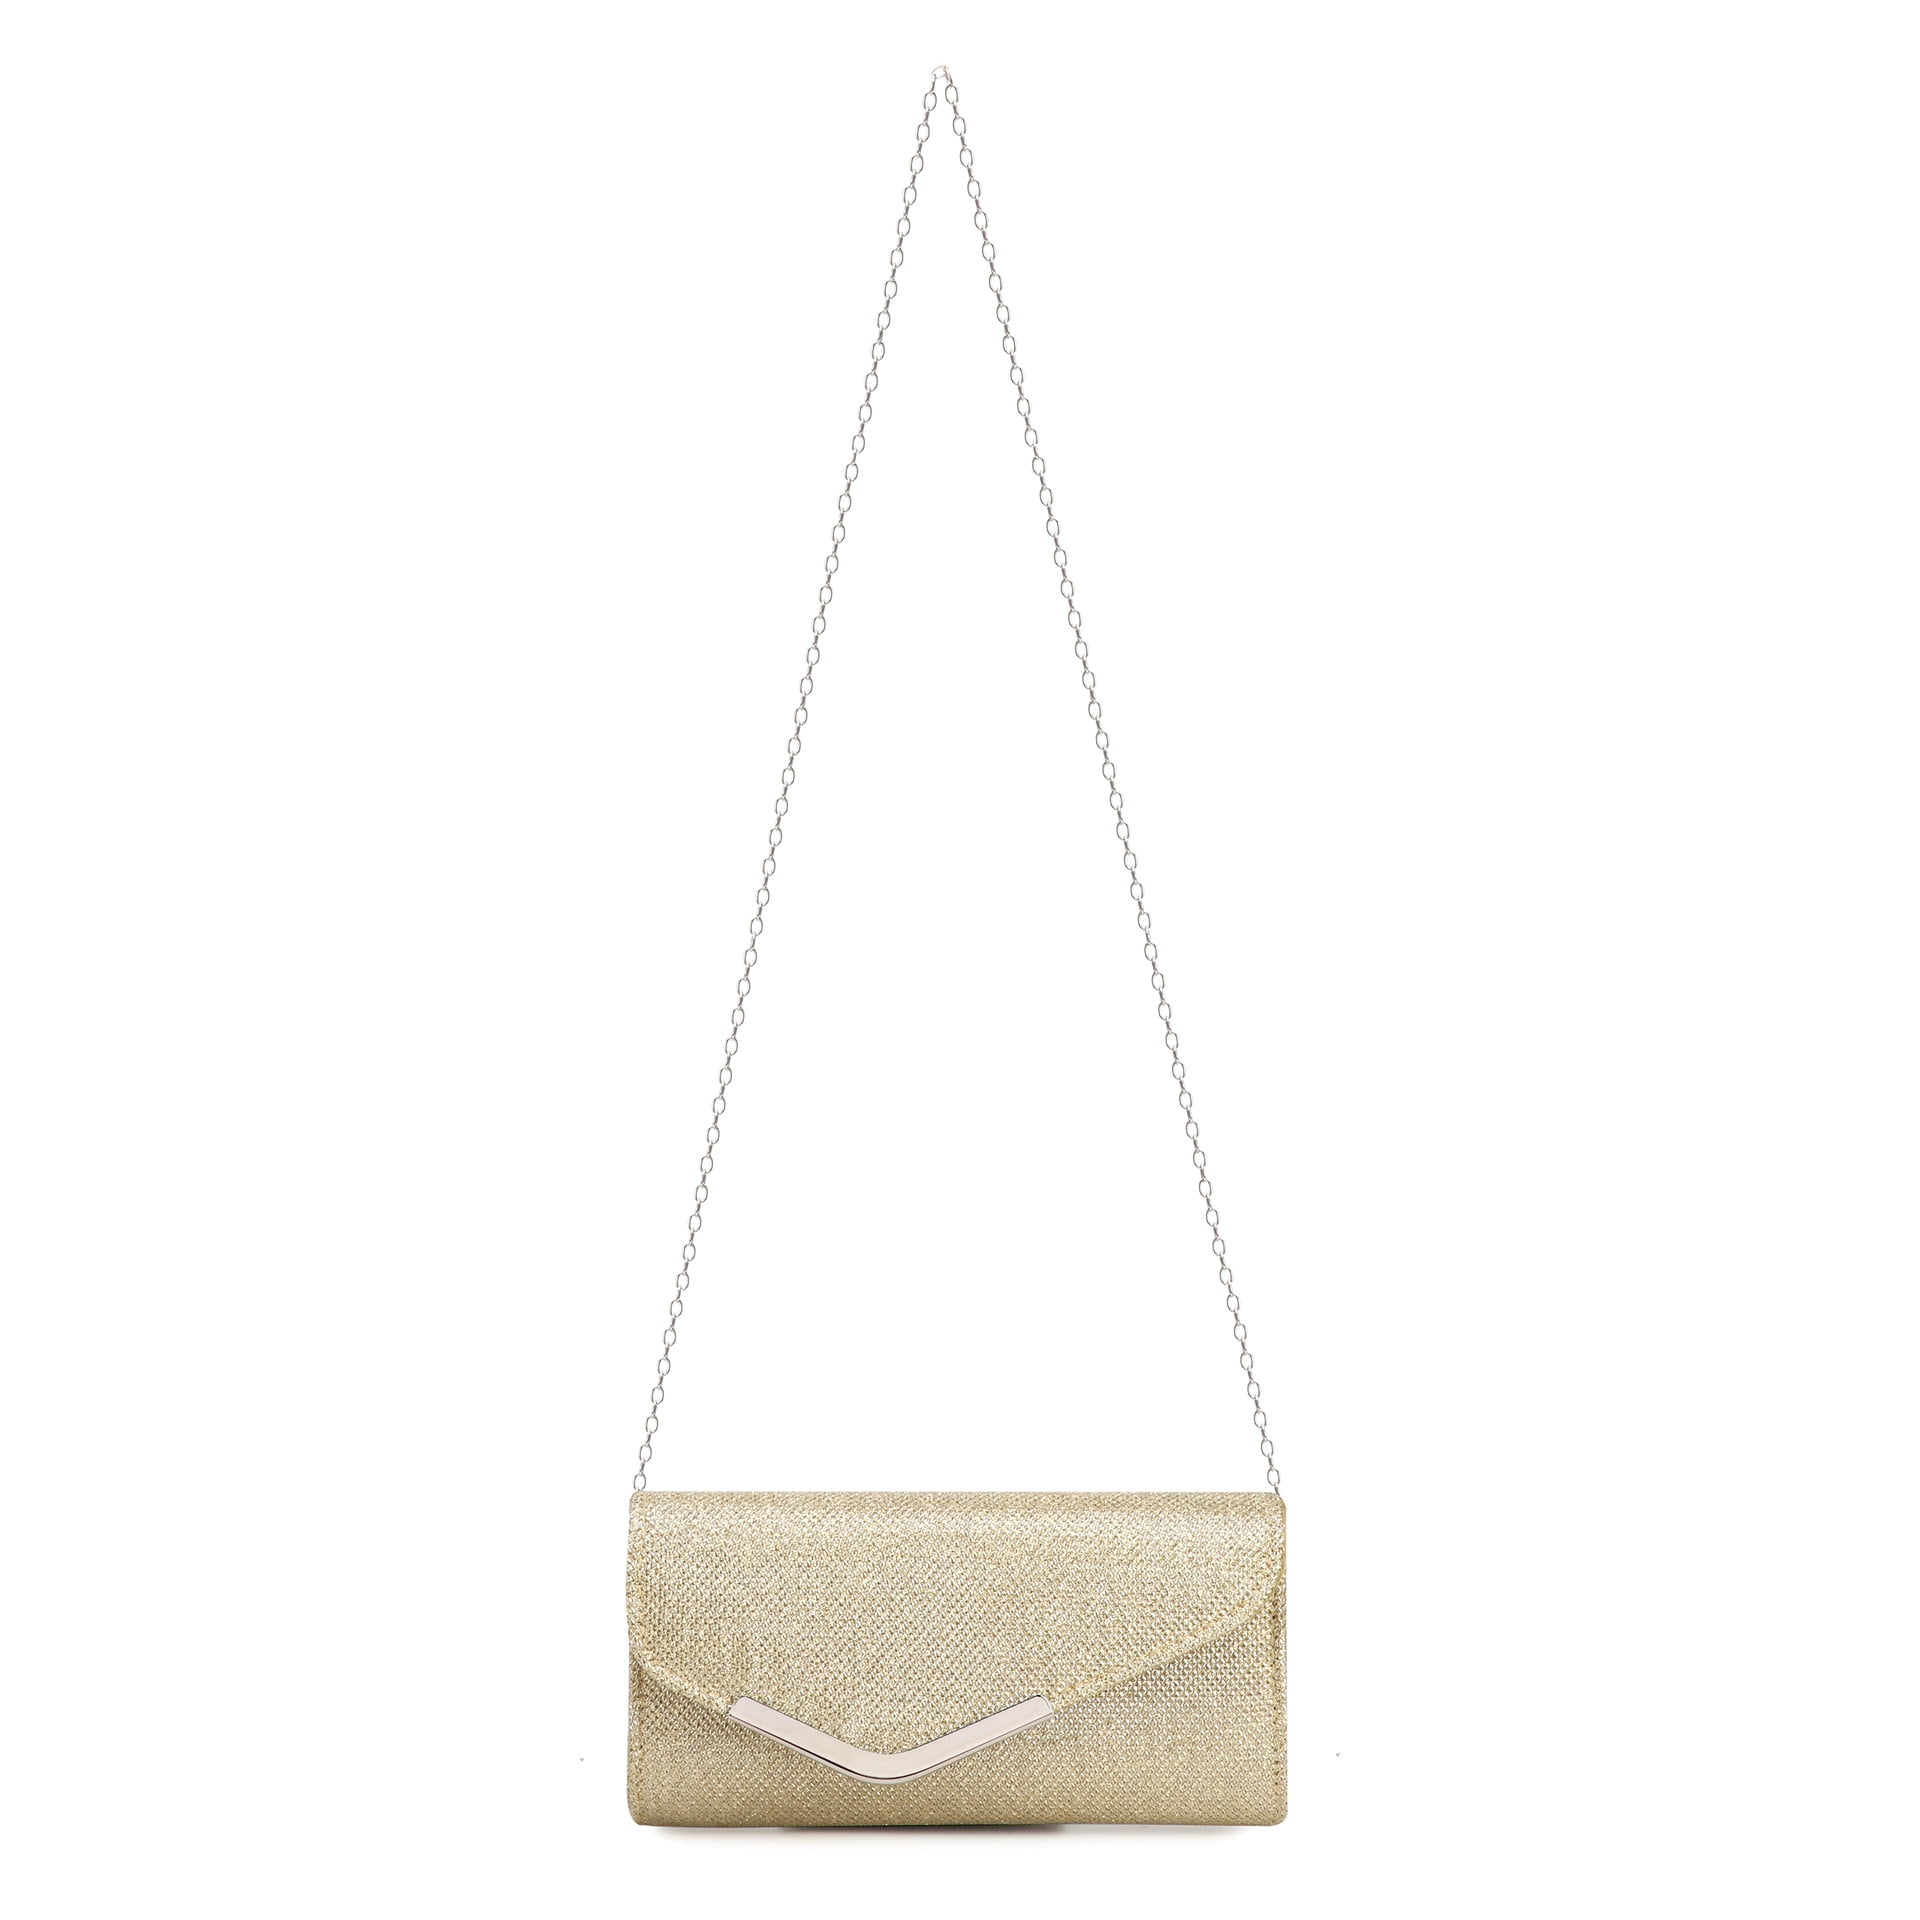 Black Satin Clutch Purse Elegant Box Evening Bag | Wedding clutch purse,  Black clutch bags, Clutch purse black